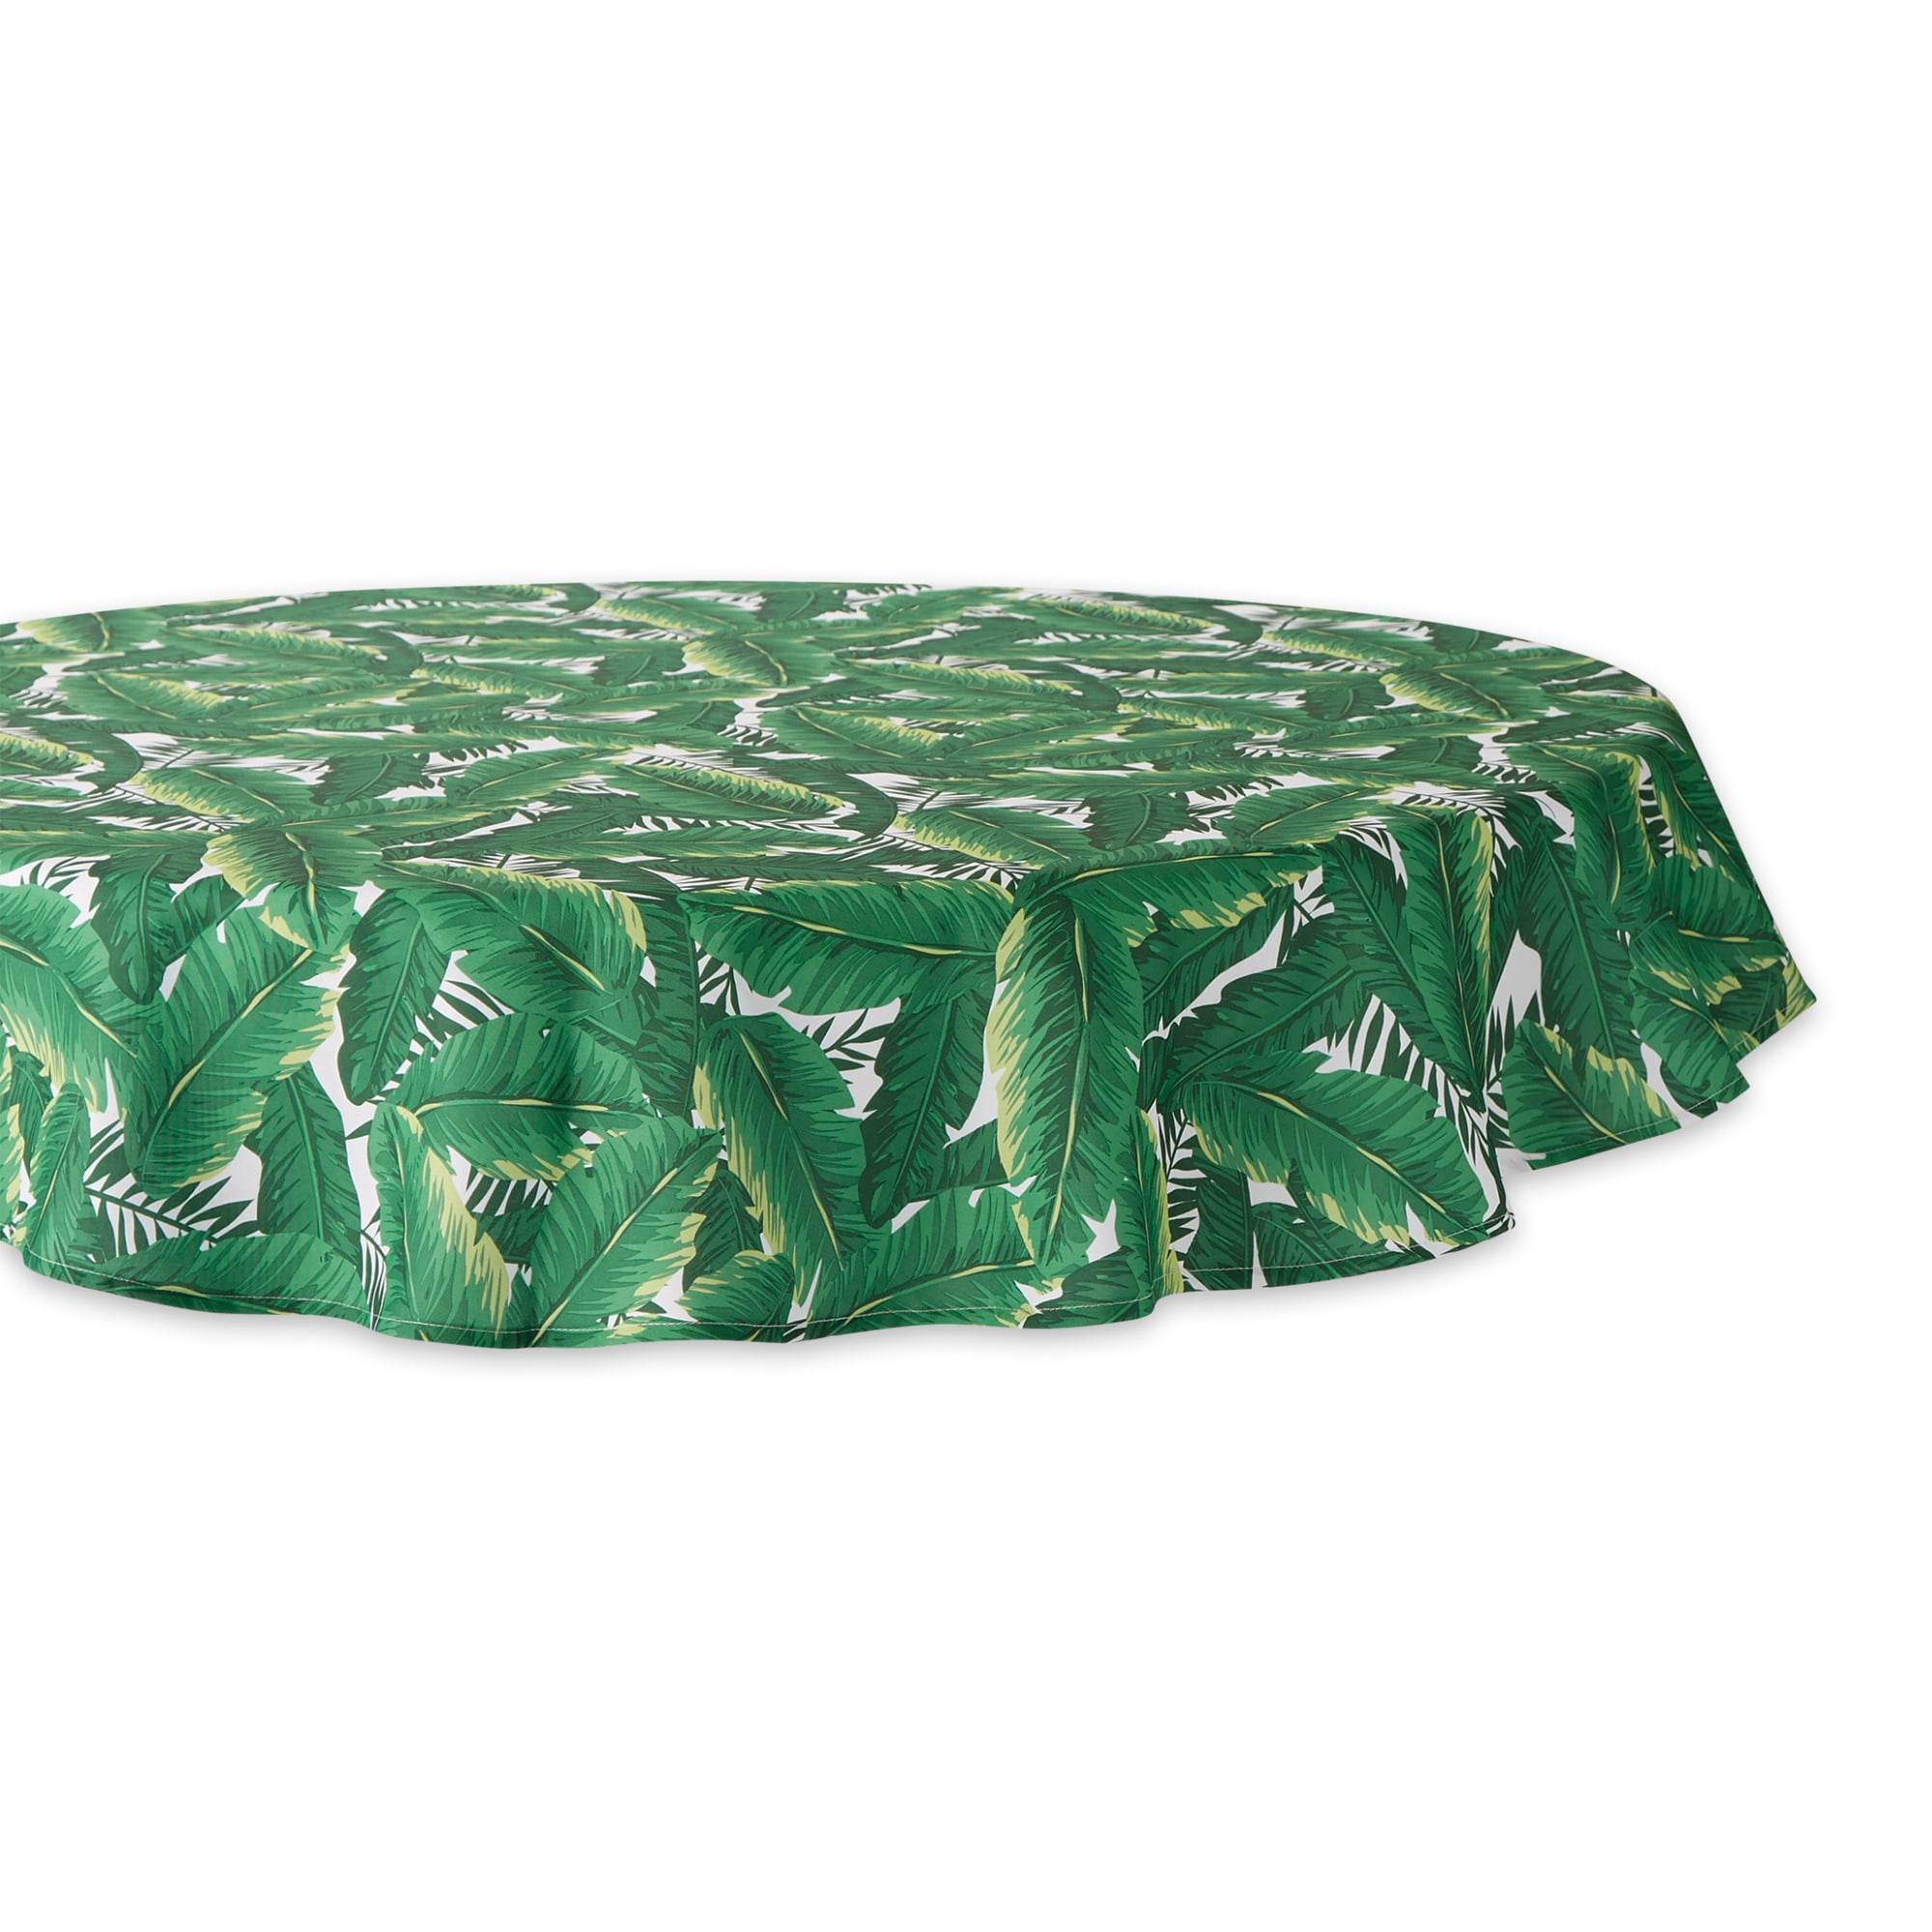 Banana Leaf Outdoor Tablecloth 60 Round - Walmart.com